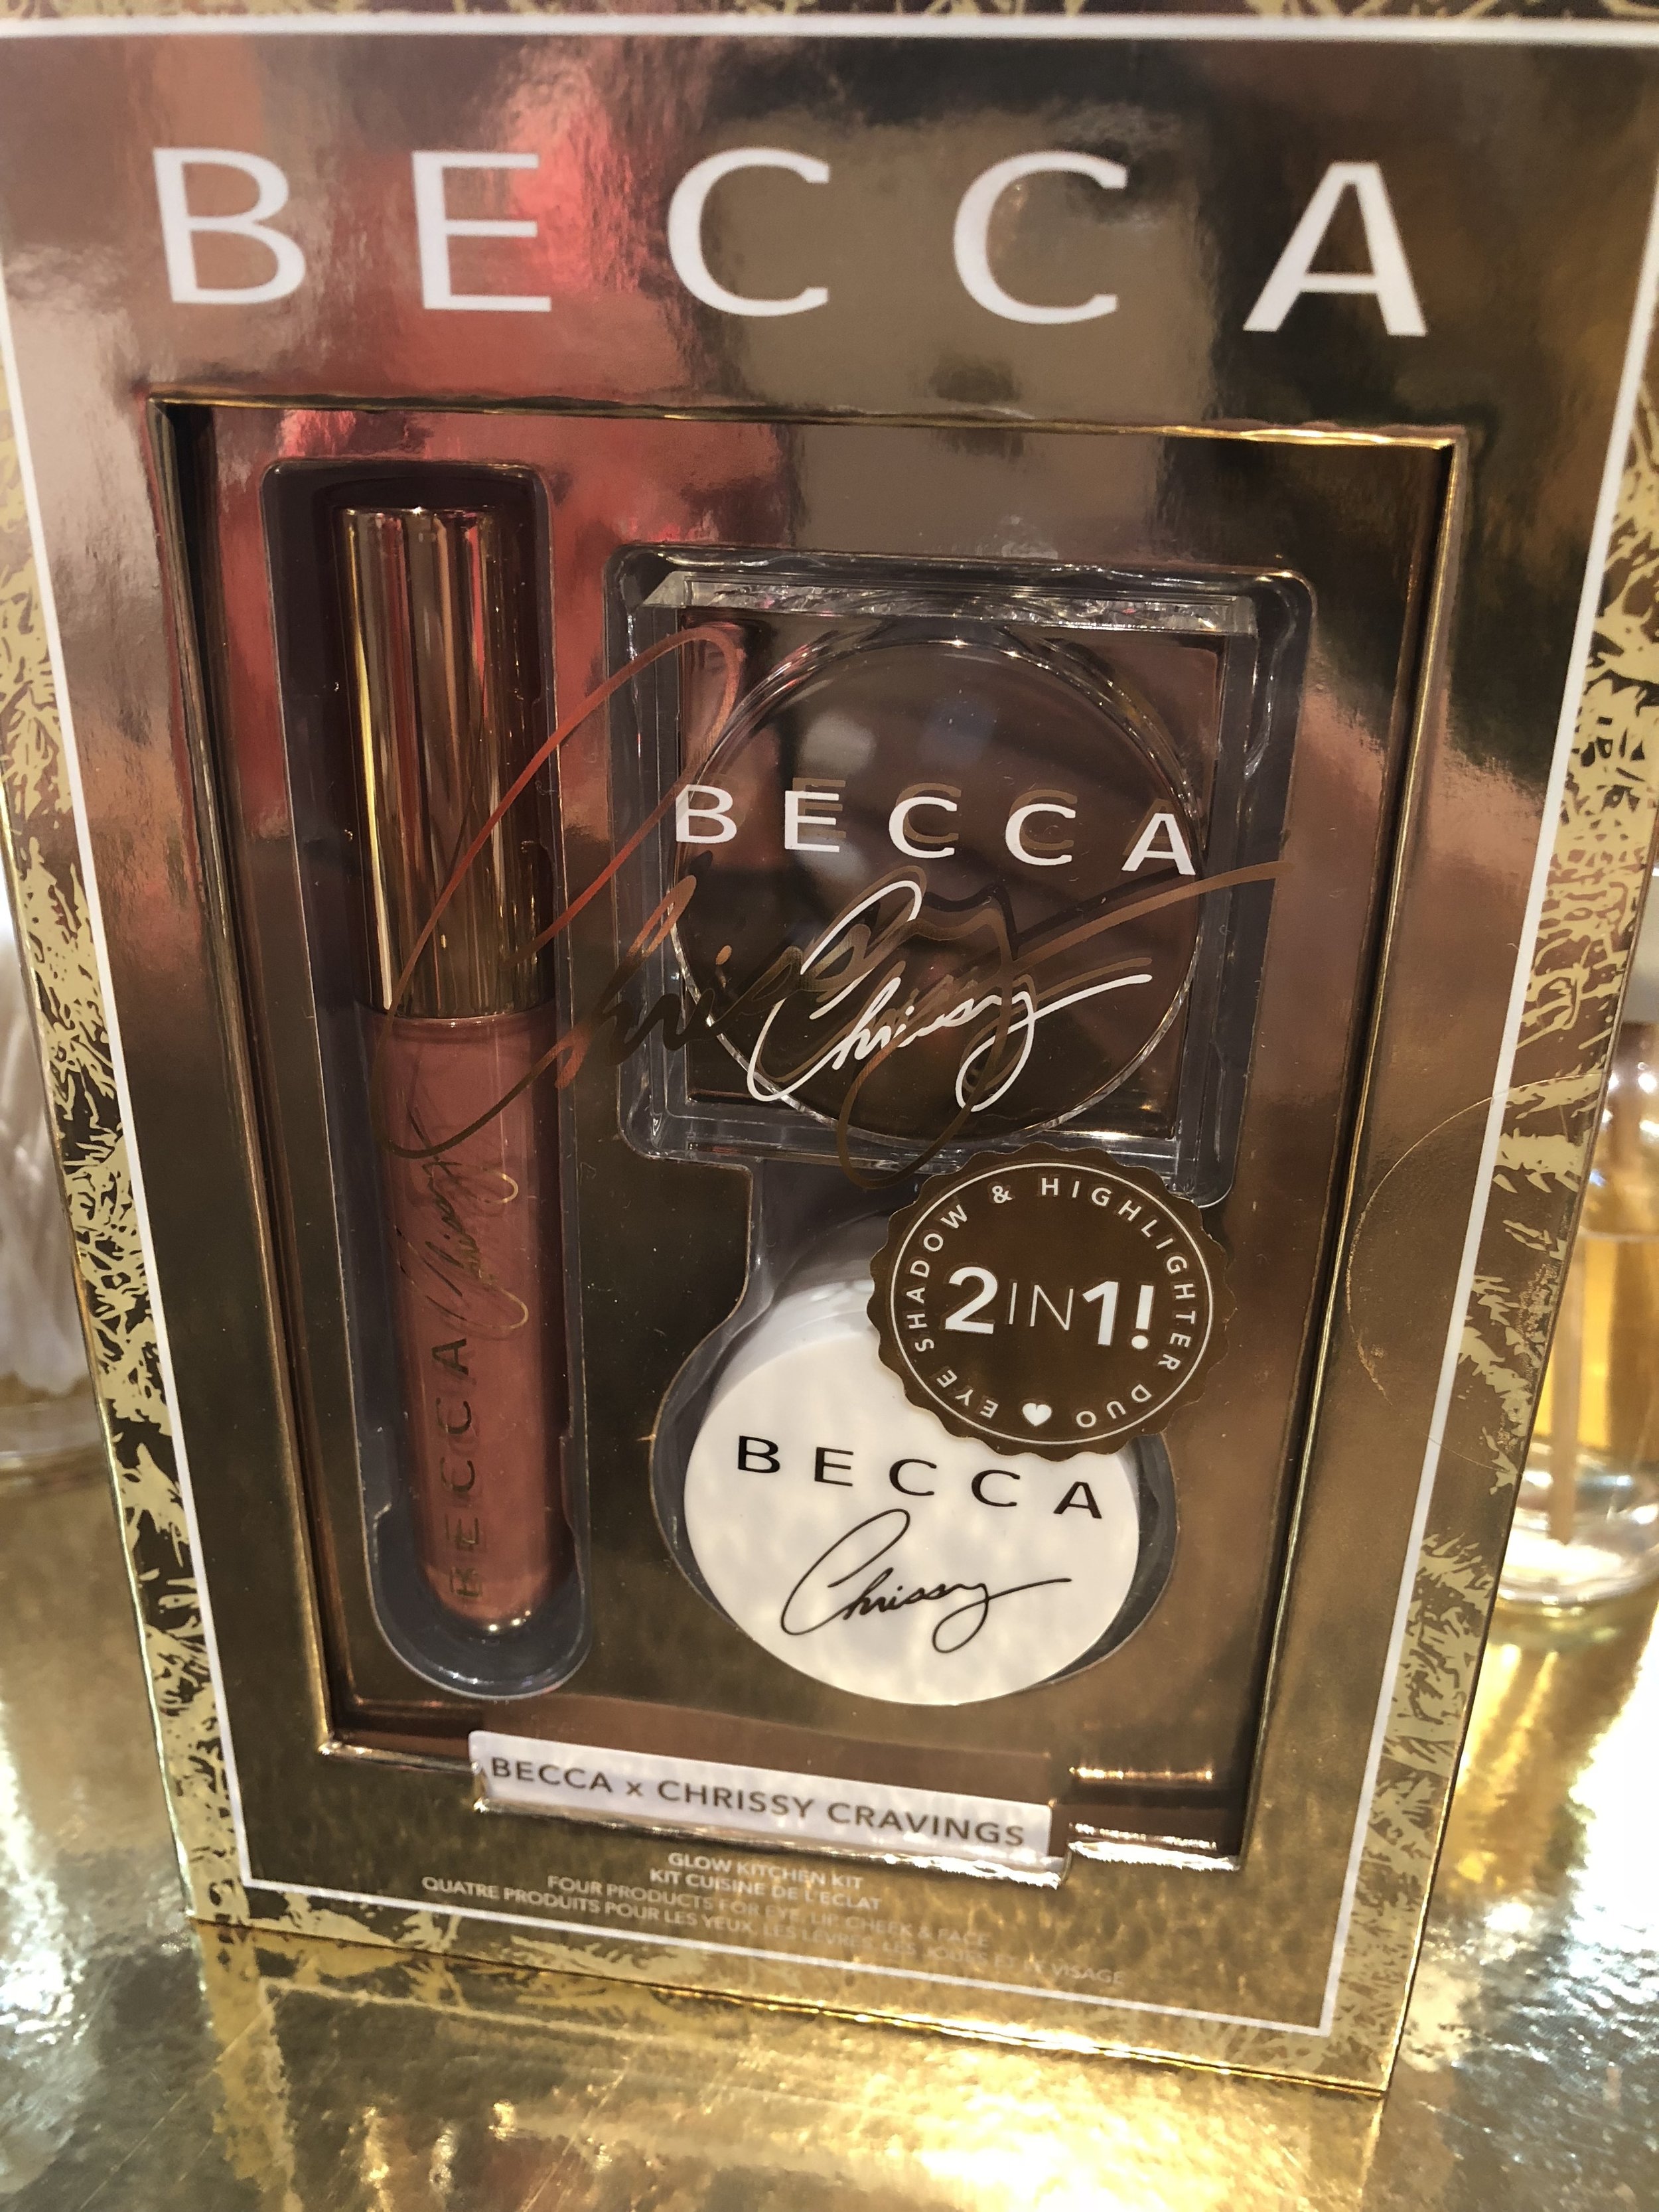  - Becca x Chrissy Teigen’s scented holiday glow kit